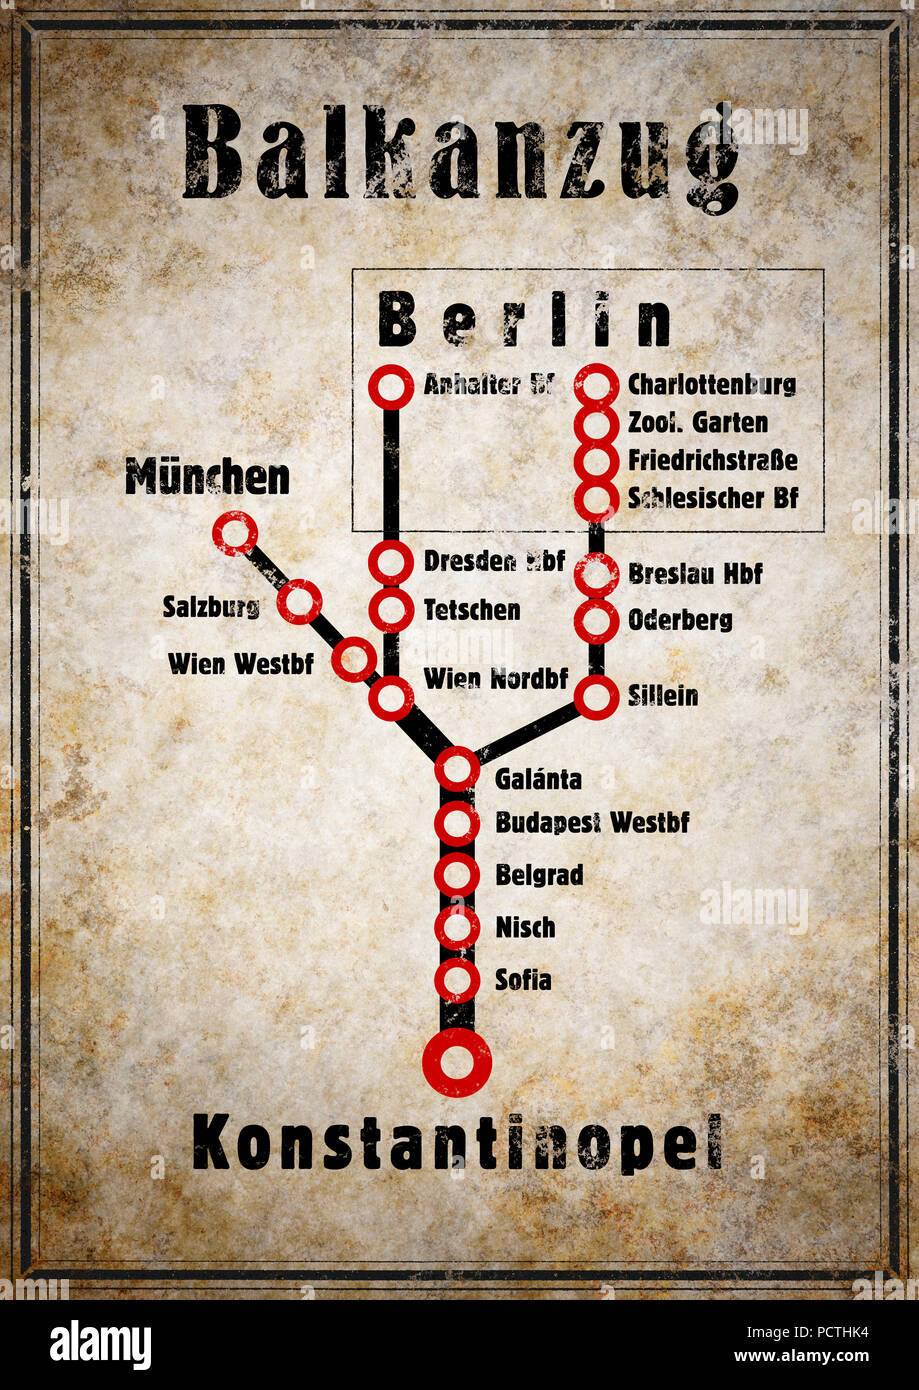 Balkan train, train schedule, Berlin - Constantinople, graphic, RailArt Stock Photo